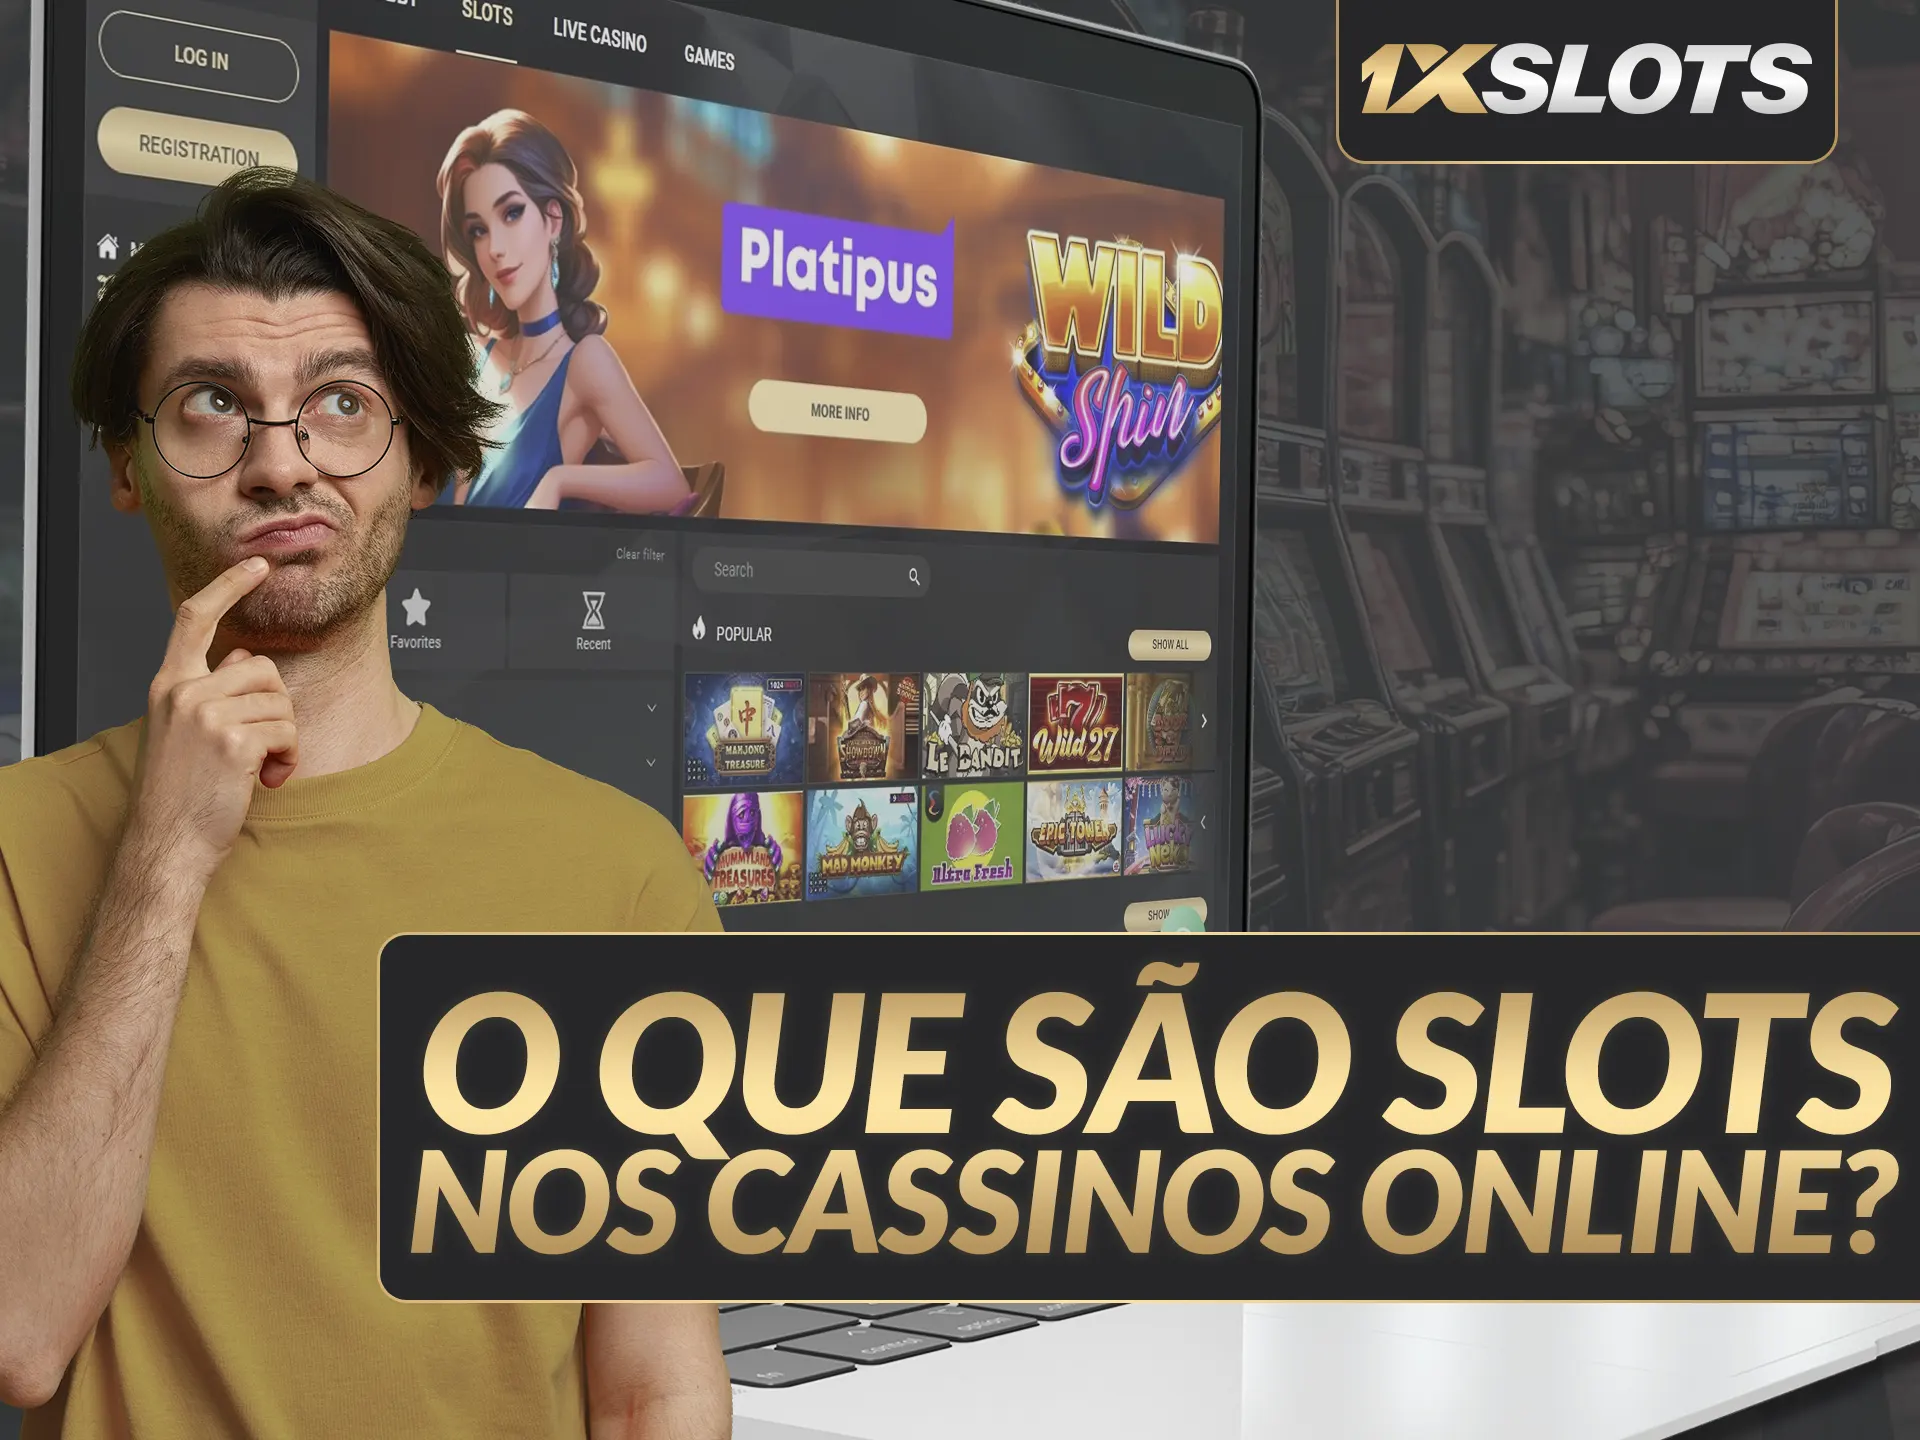 1xSlots oferece jogos de slots online, semelhantes às máquinas de casino.